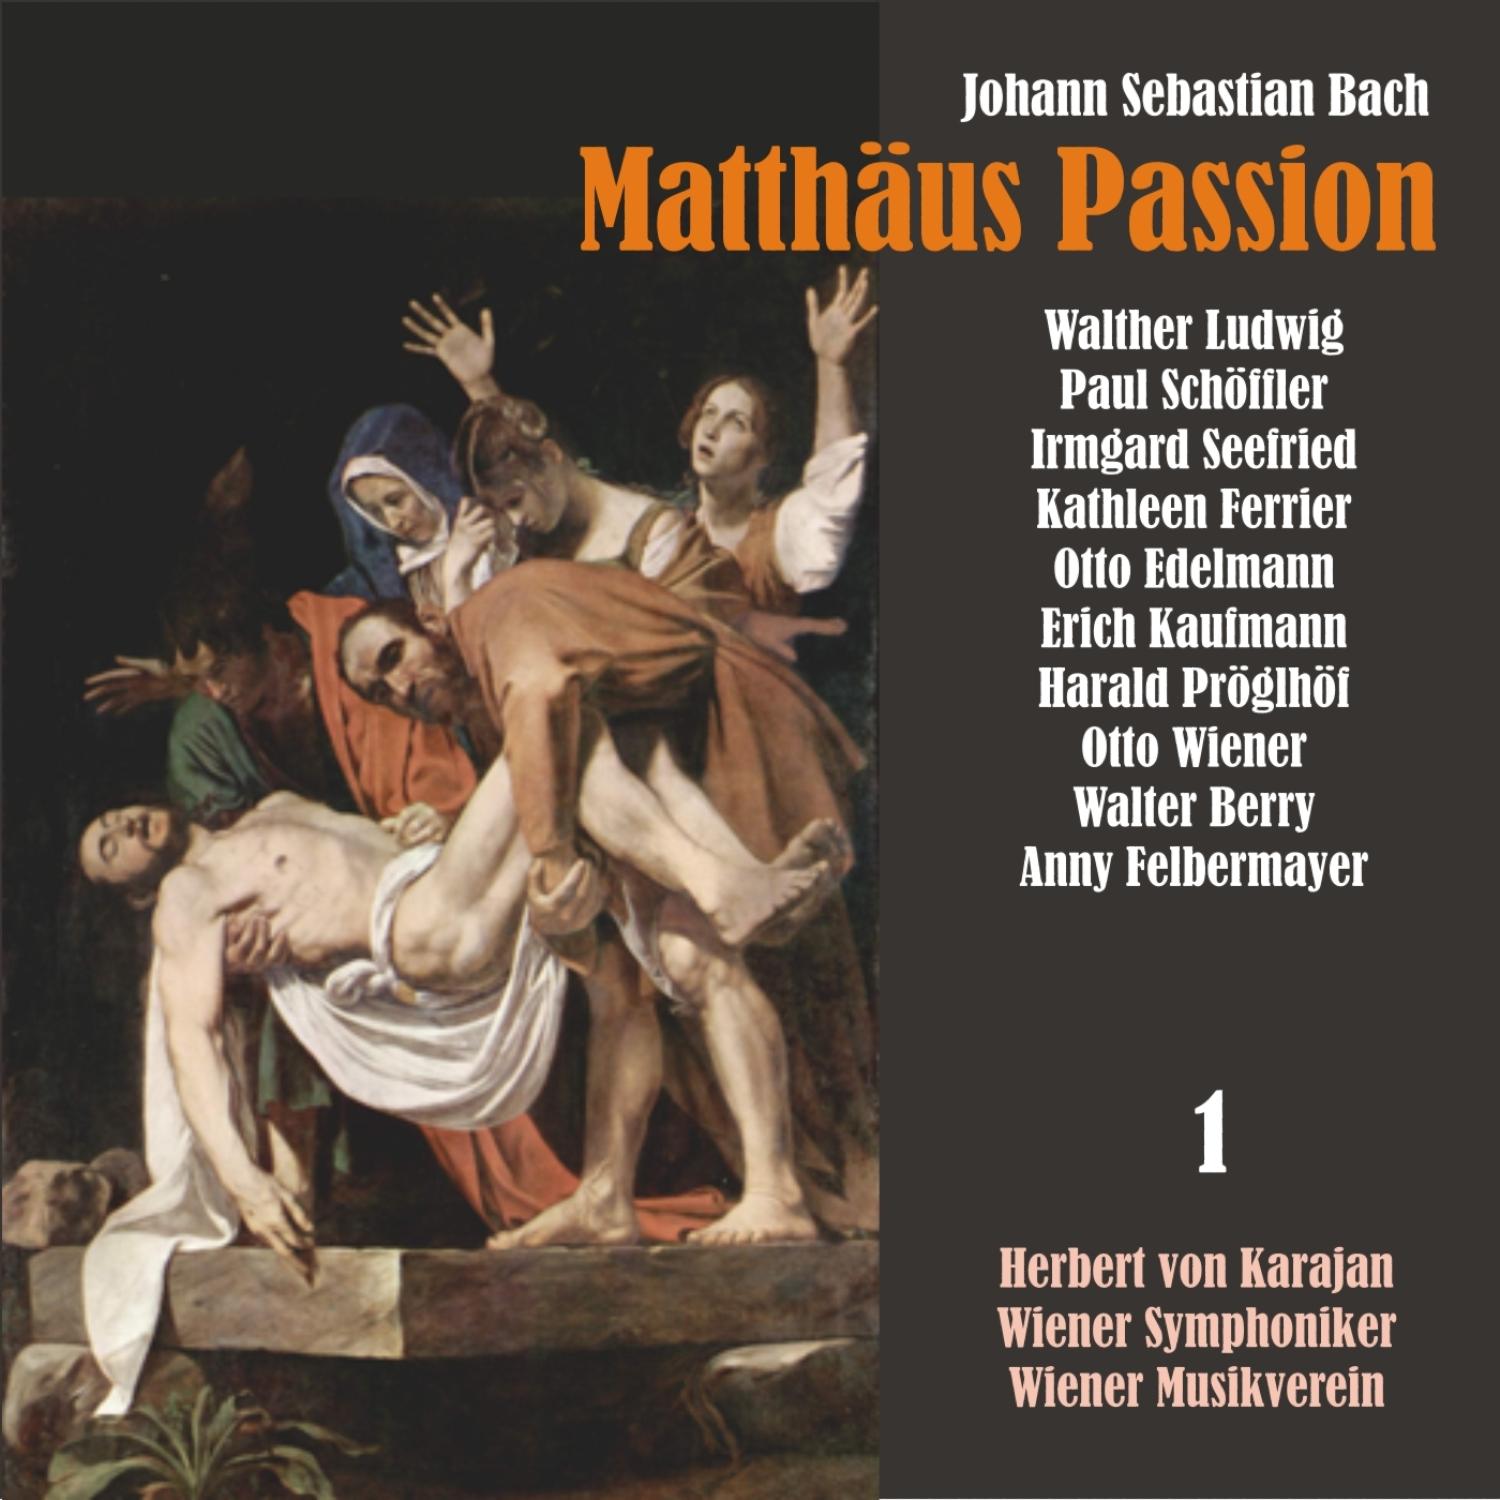 Matthäus Passion, BWV 244: "Kommt, ihr Torhter, helft mir klagen"